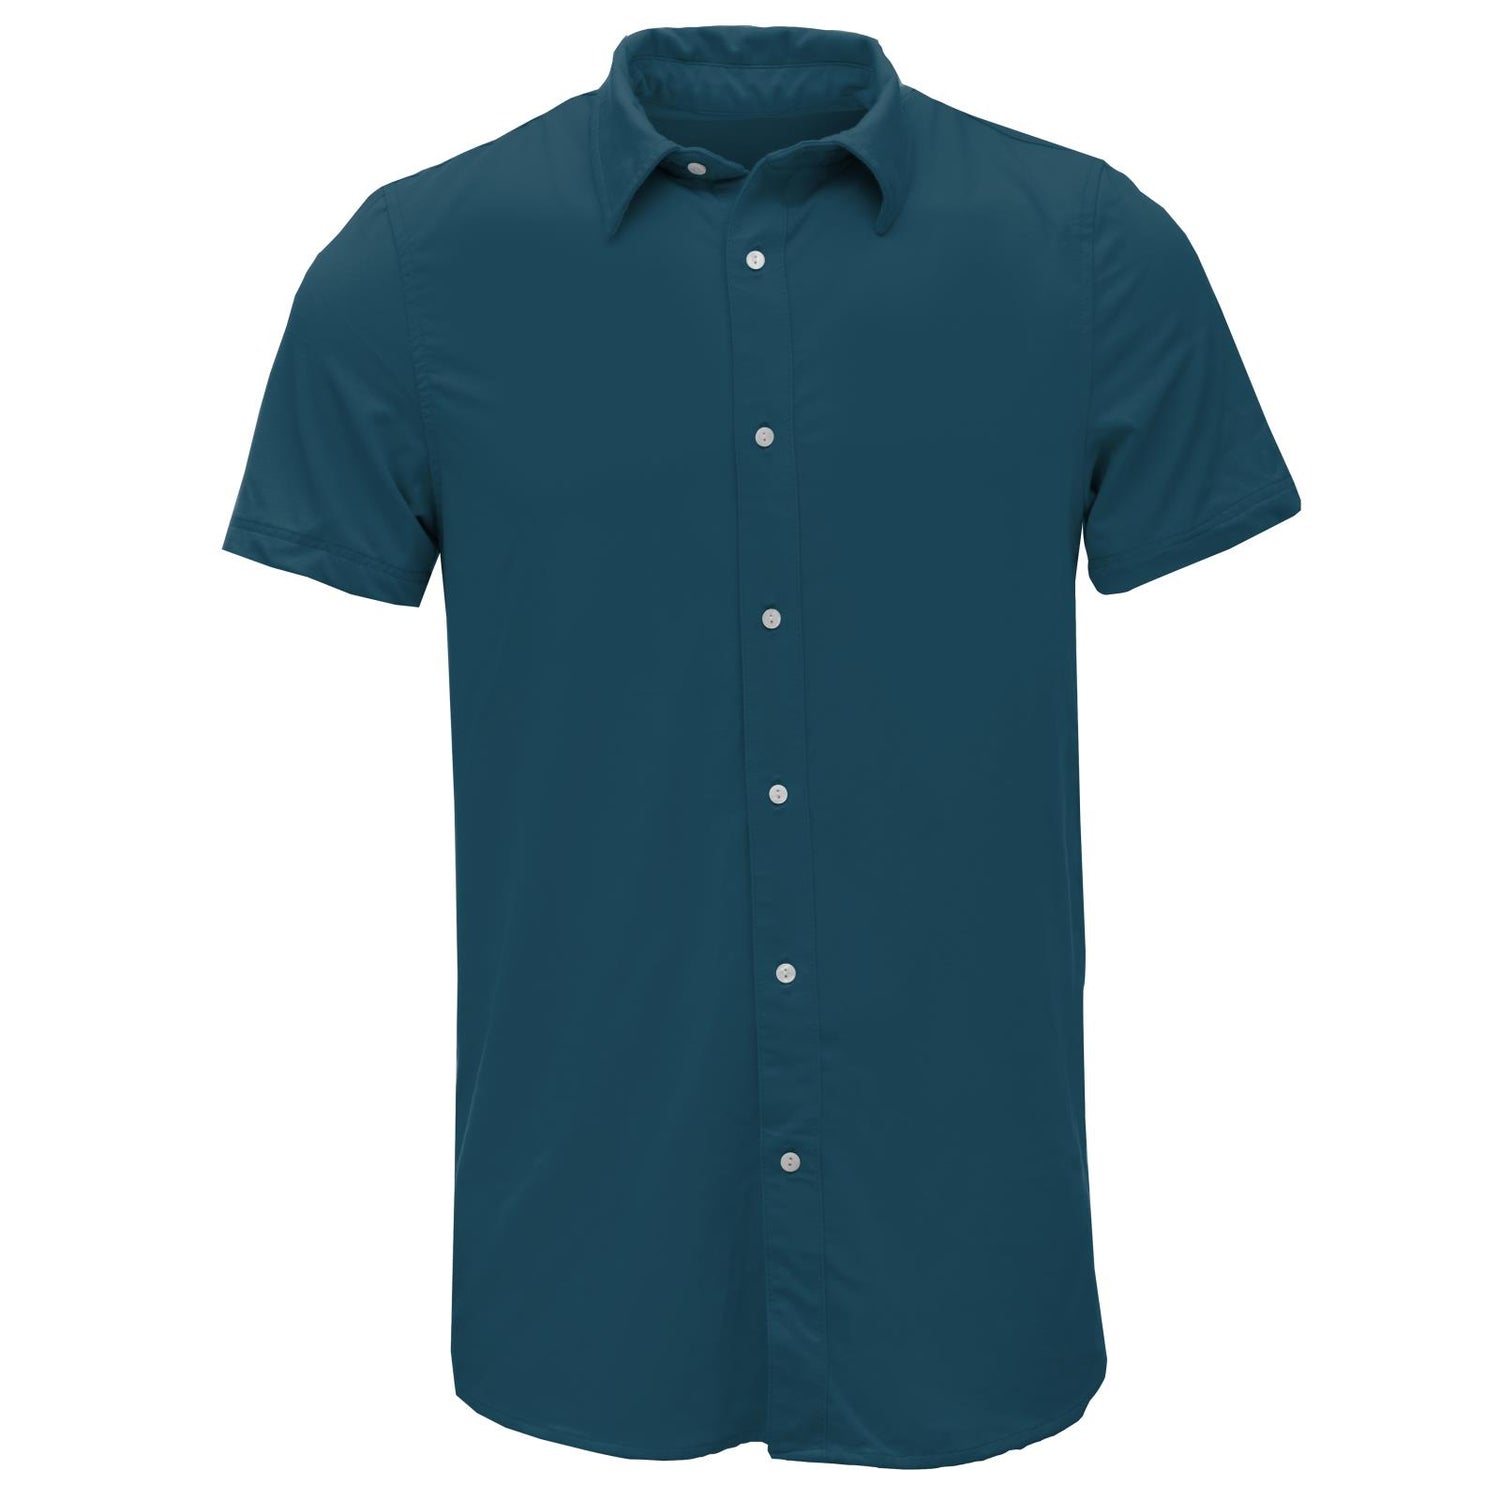 Men's Short Sleeve Luxe Jersey Button Down Shirt in Peacock